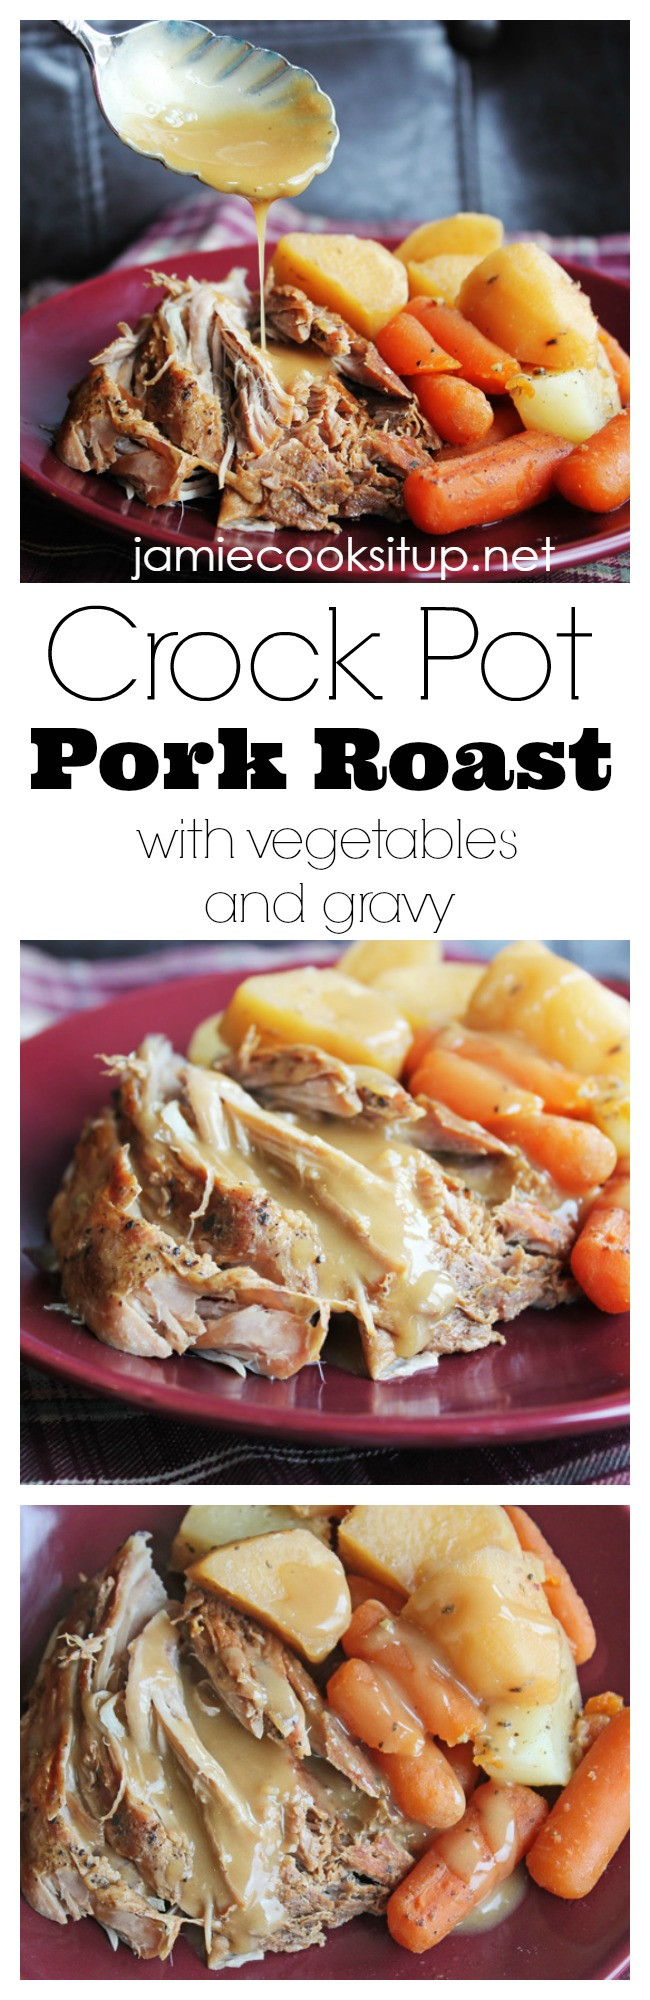 Pork Stew Crock Pot Recipes
 Crock Pot Pork Roast with Ve ables and Gravy Renewed